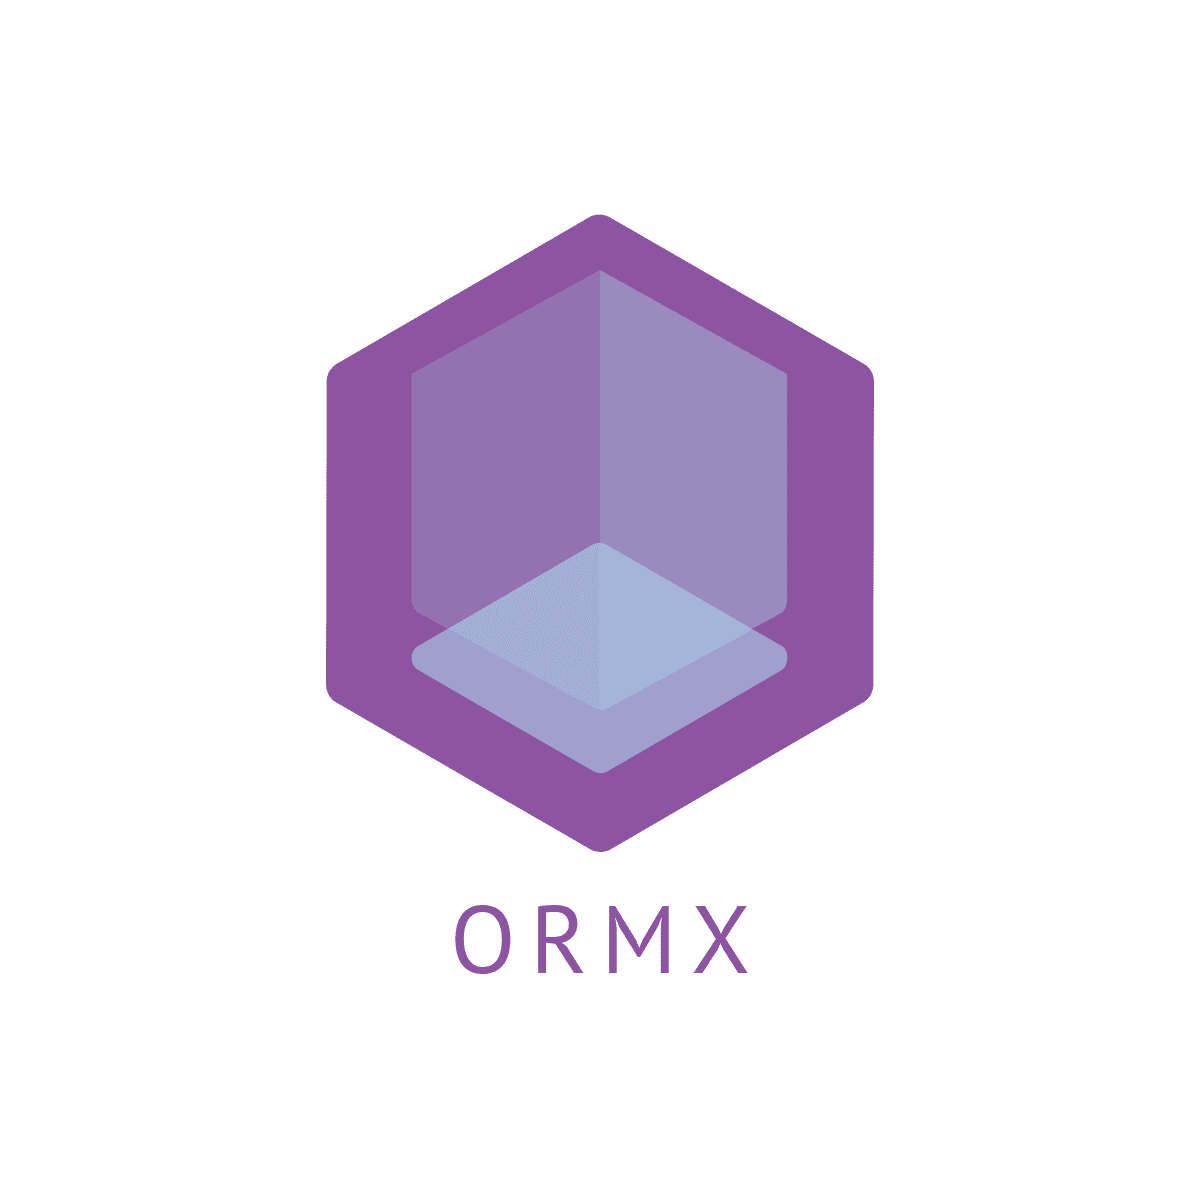 ORMX